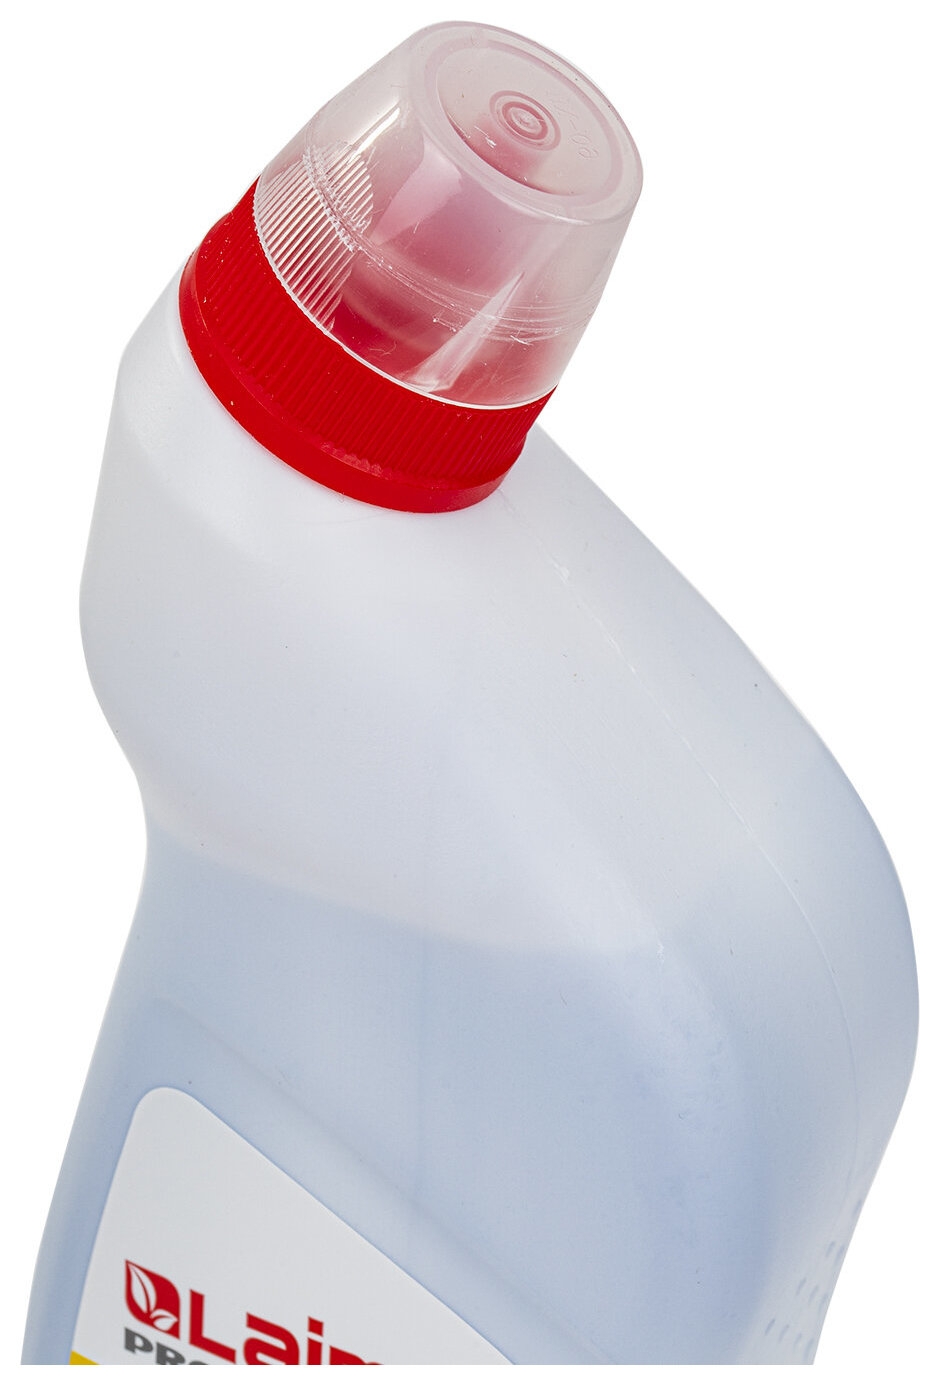 Wc gel professional. Laima WC гель для унитазов 5 литров. Синяя бутылка для уборки унитаза спрей.